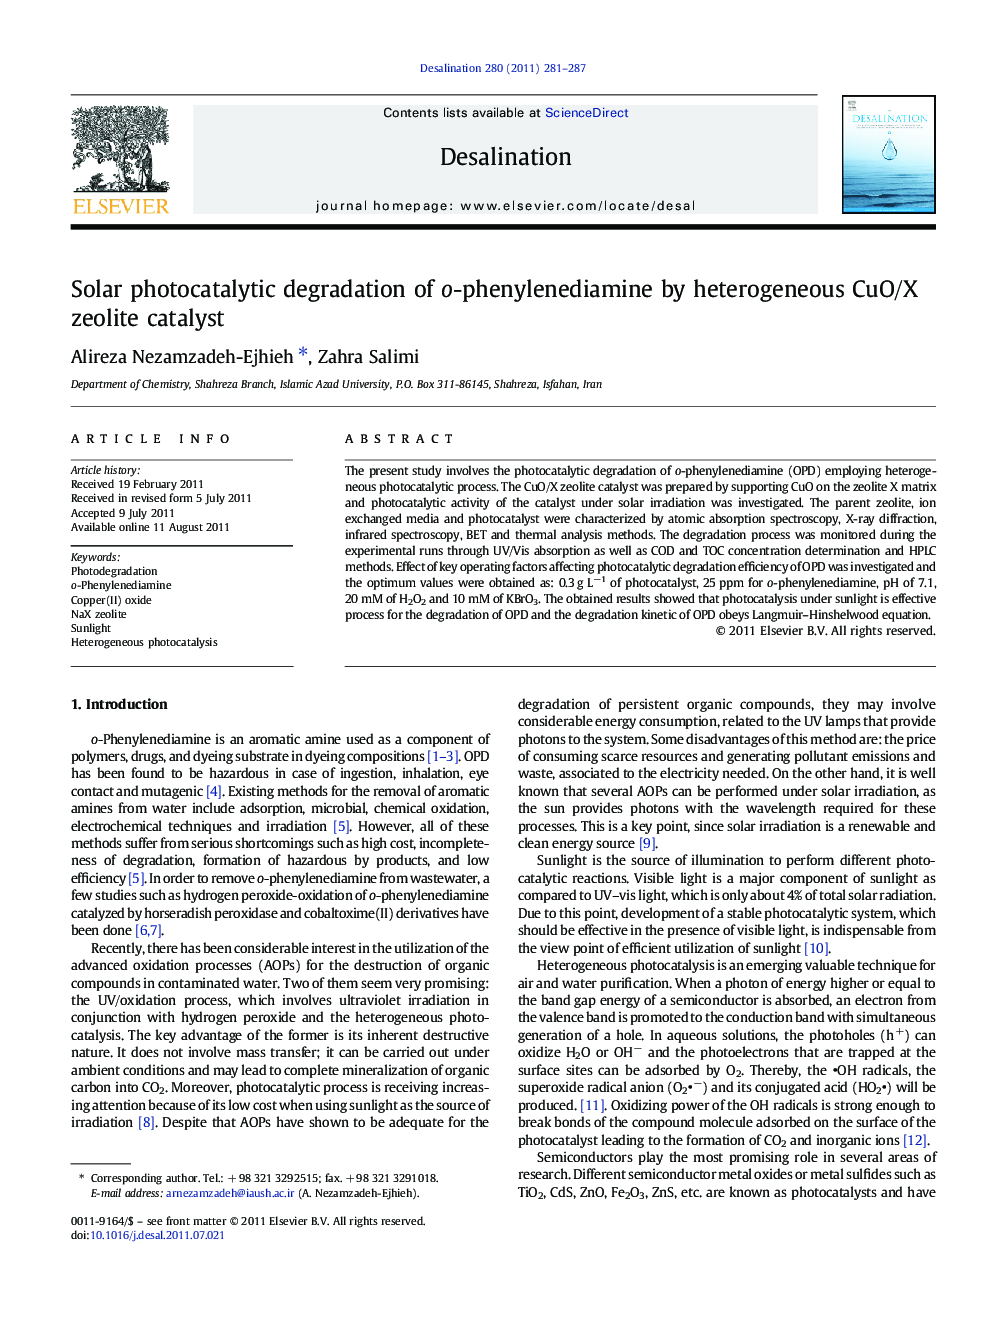 Solar photocatalytic degradation of o-phenylenediamine by heterogeneous CuO/X zeolite catalyst